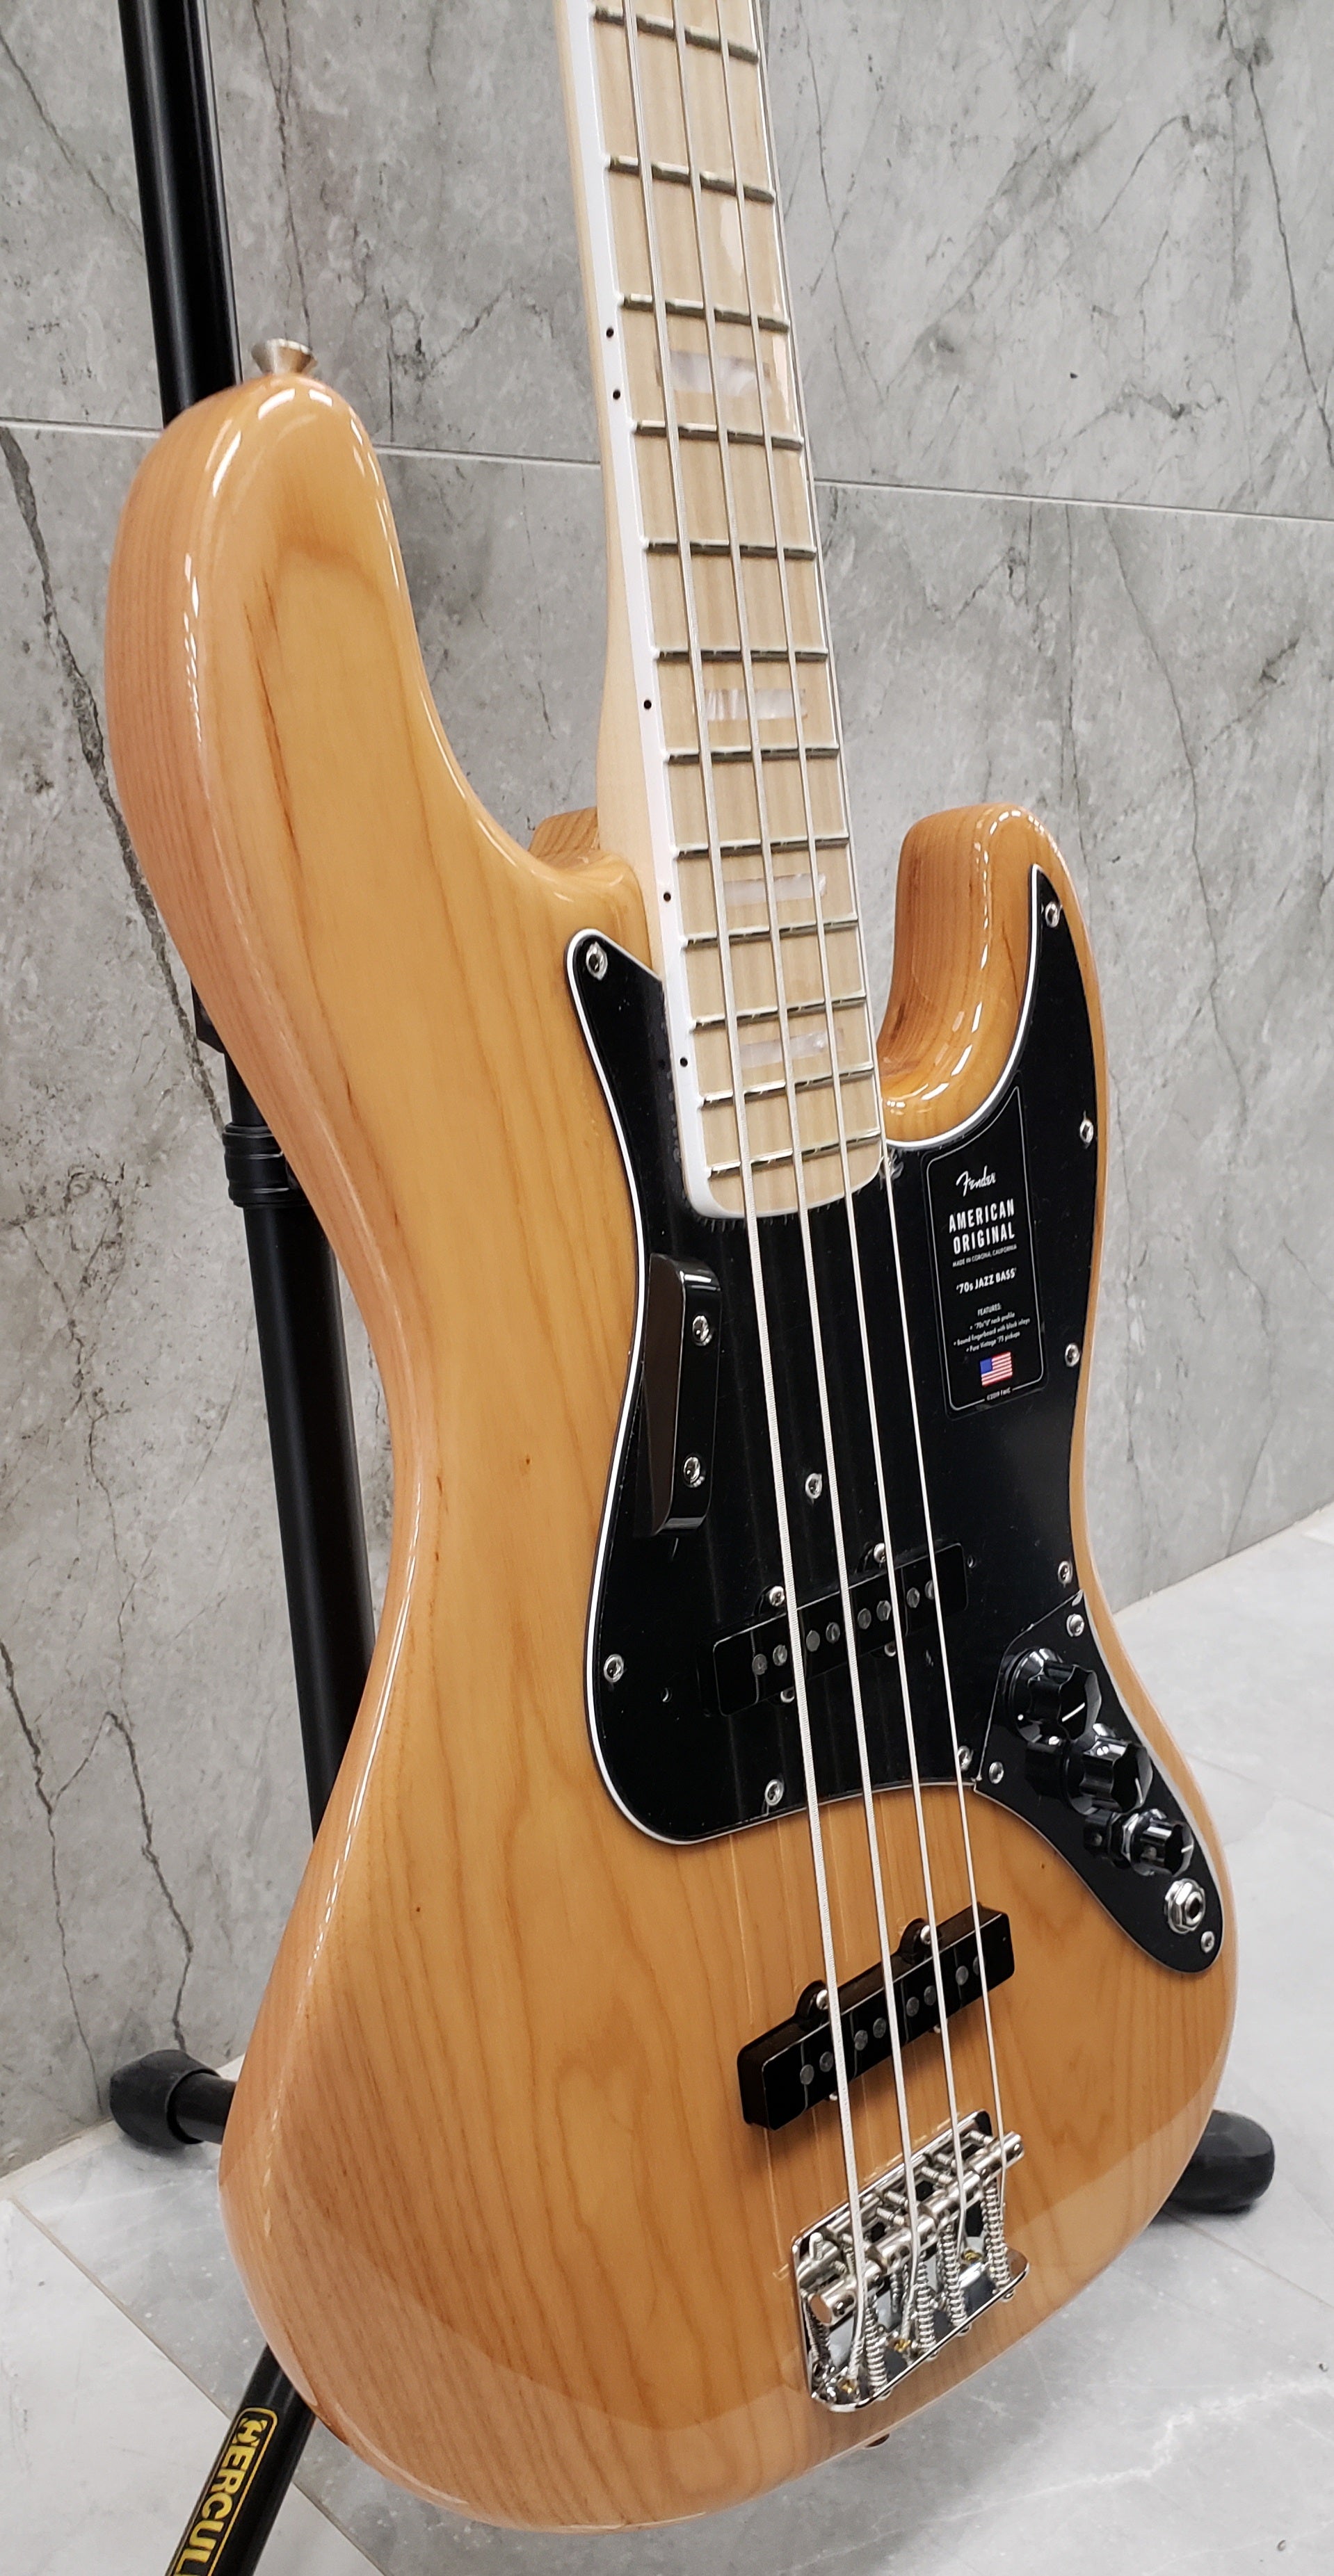 Fender American Original 70s Jazz Bass Maple Fingerboard Natural 0190142821 SERIAL NUMBER V2204558 - 9.4 LBS